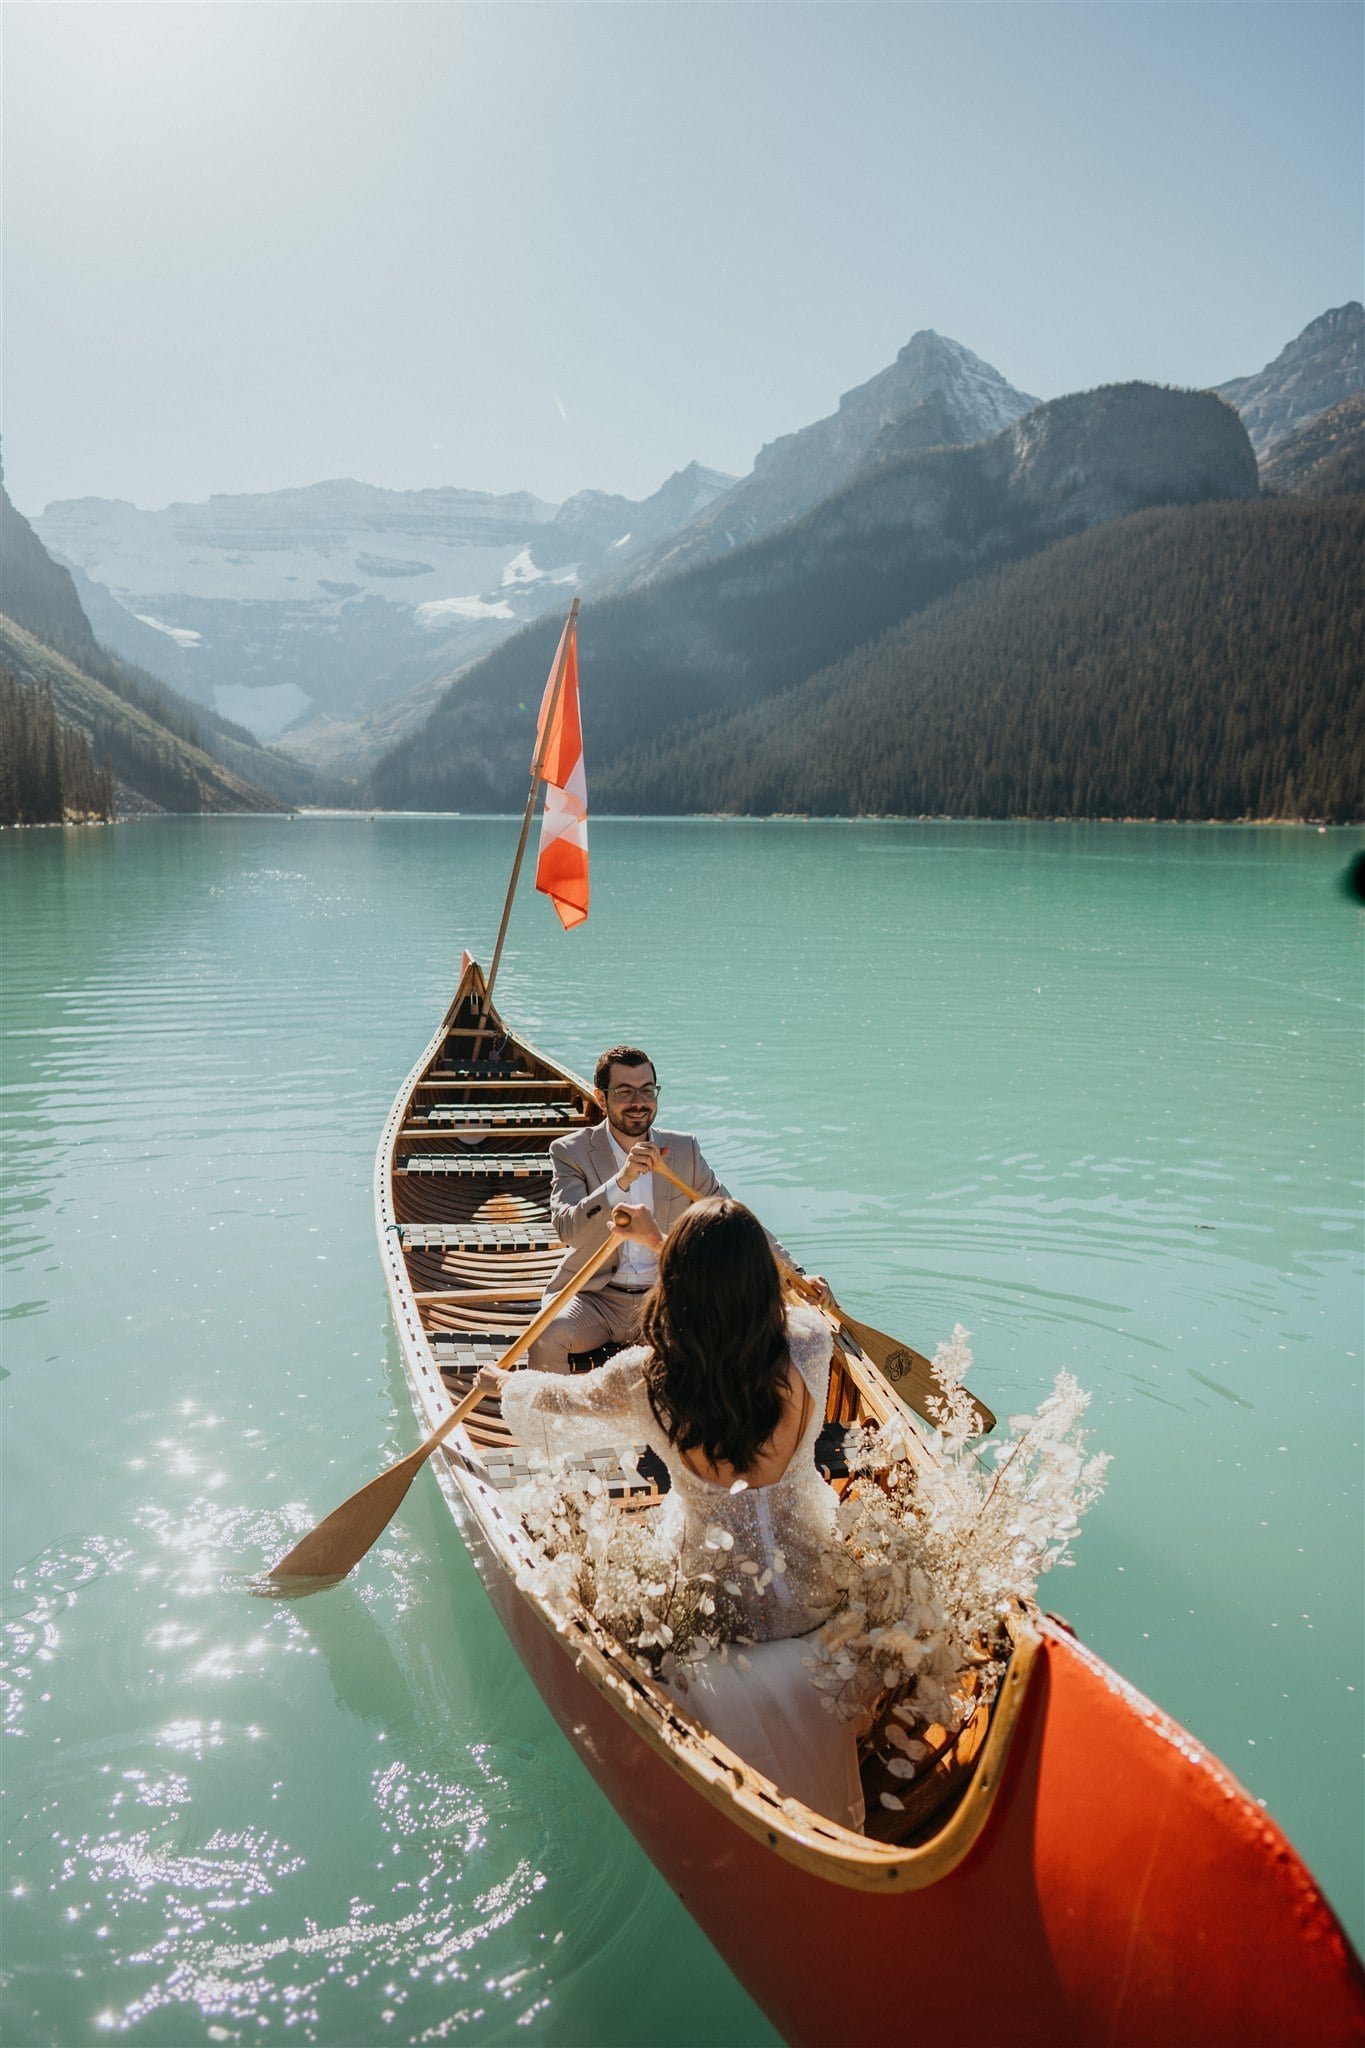 Canoe adventure elopement photos in Alberta, Canada